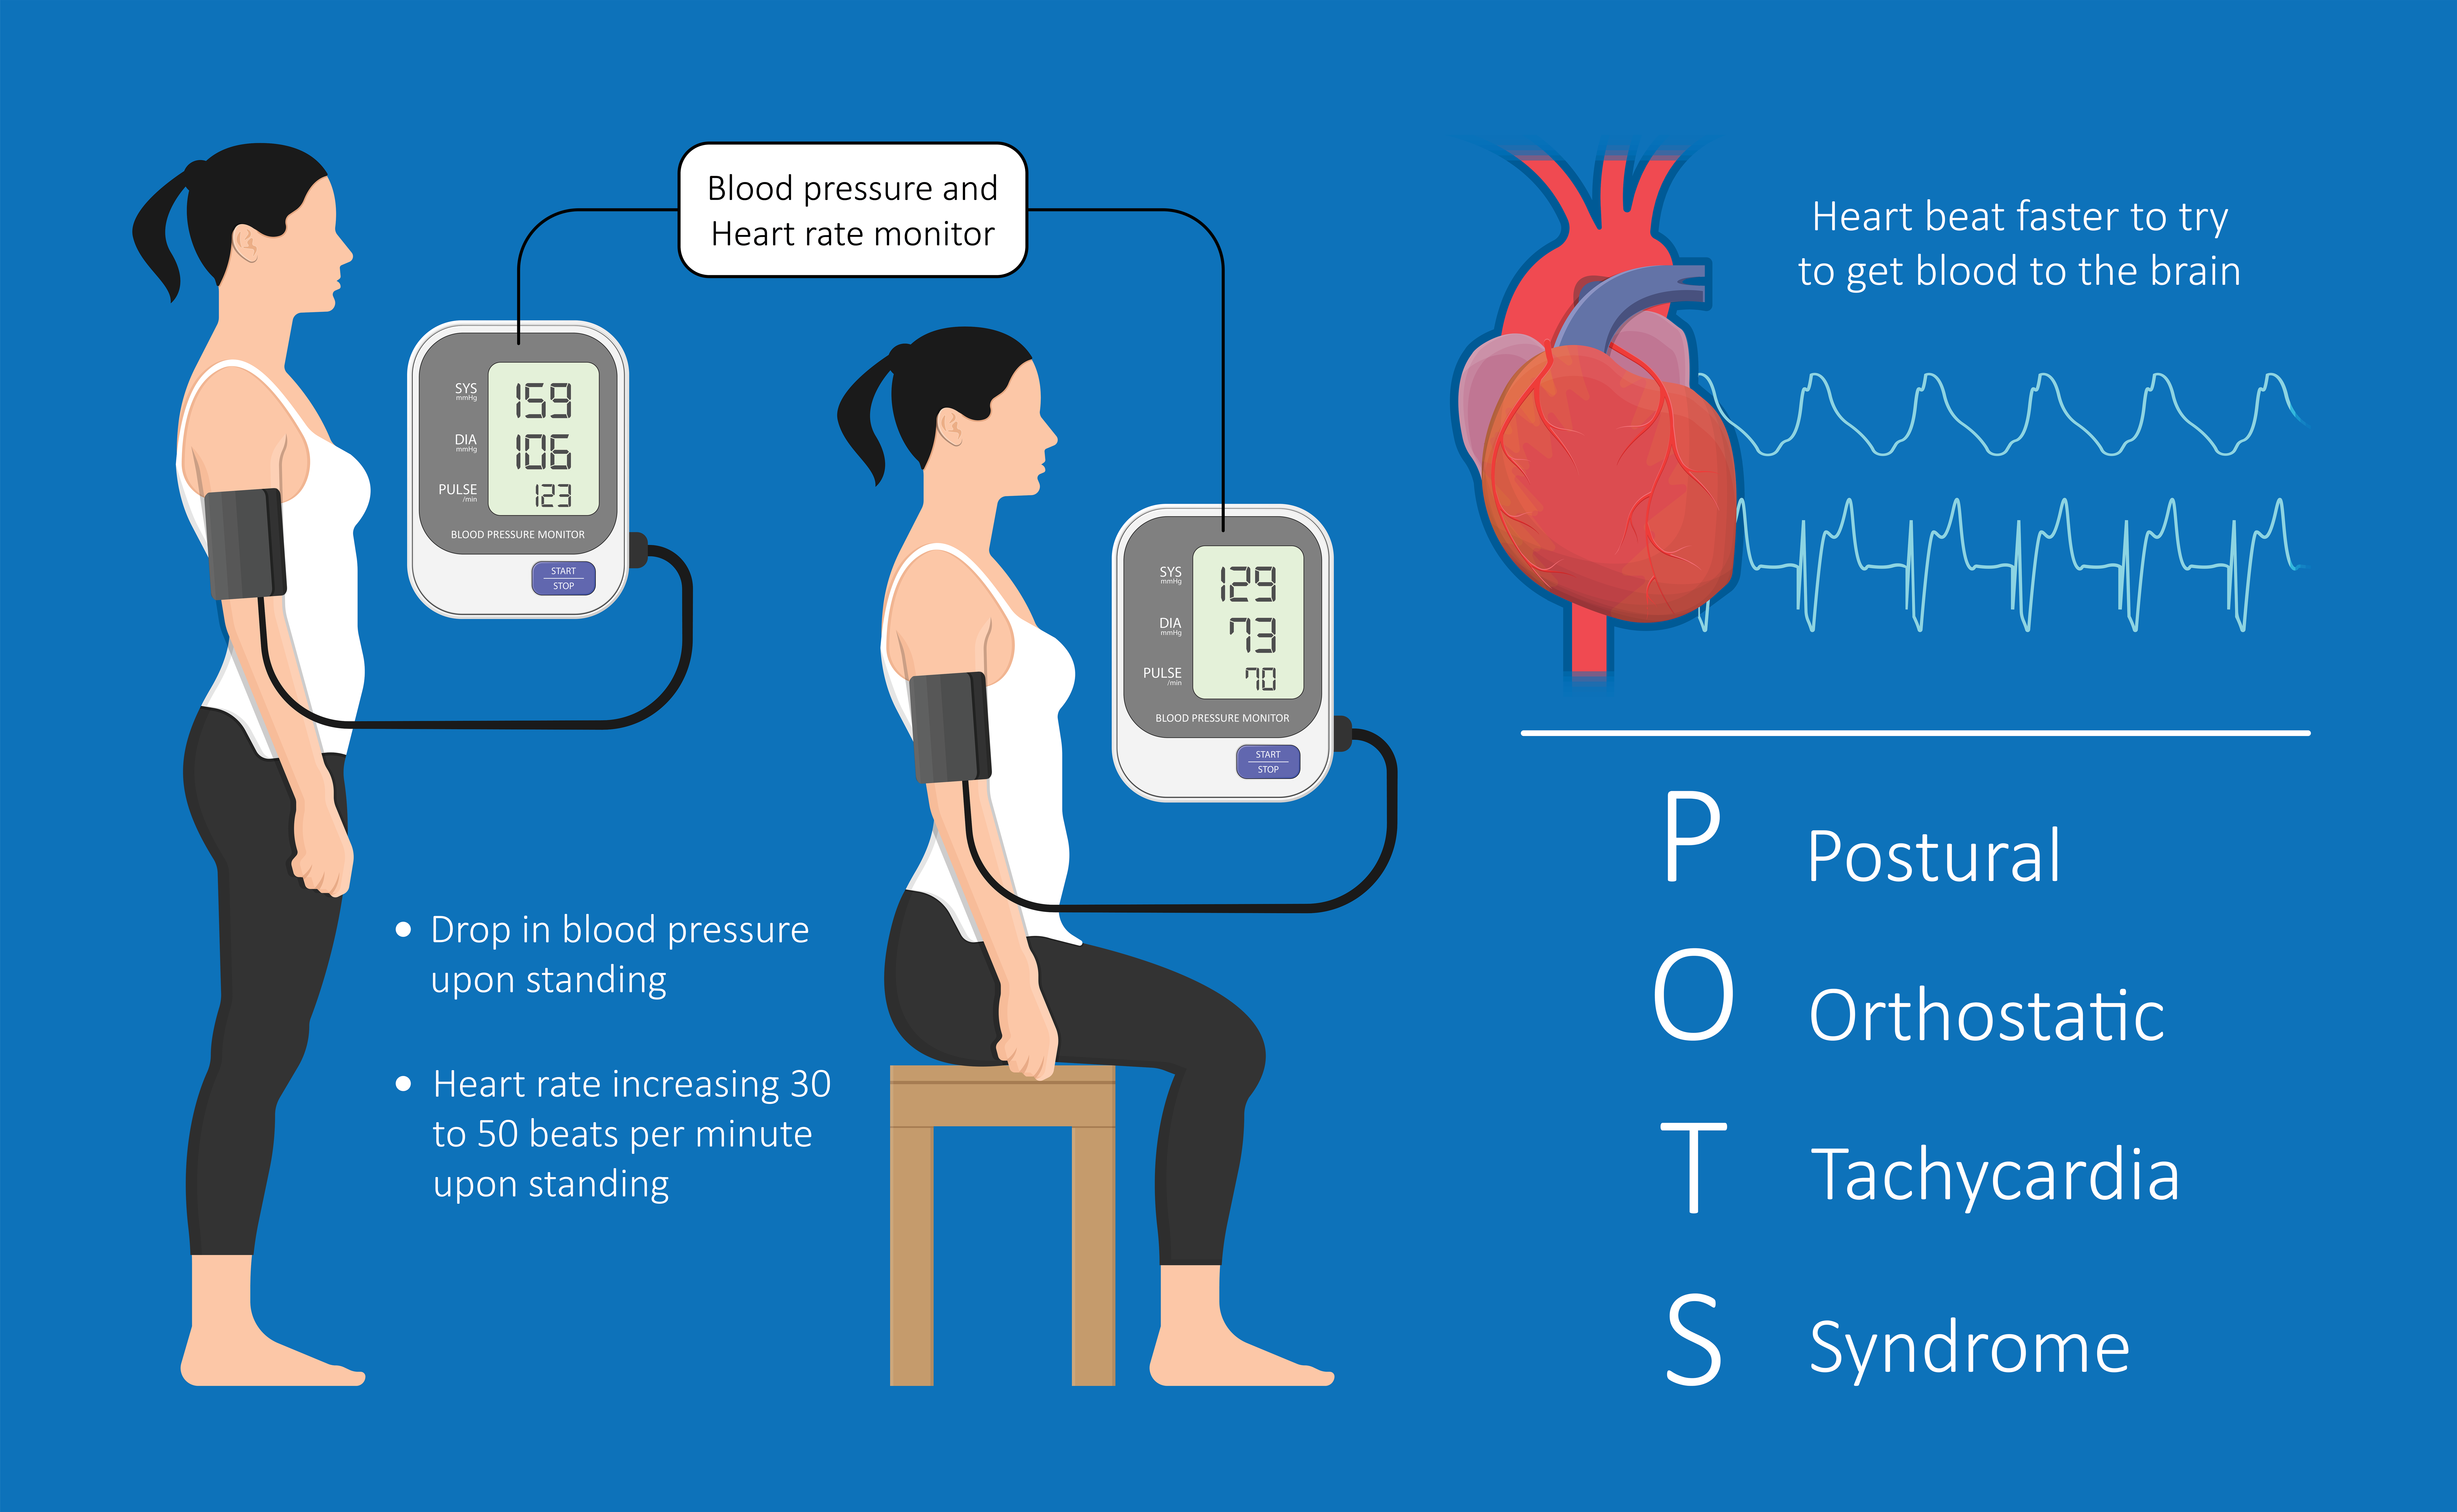 Explains Postural Orthostatic Tachycardia Syndrome (POTS)